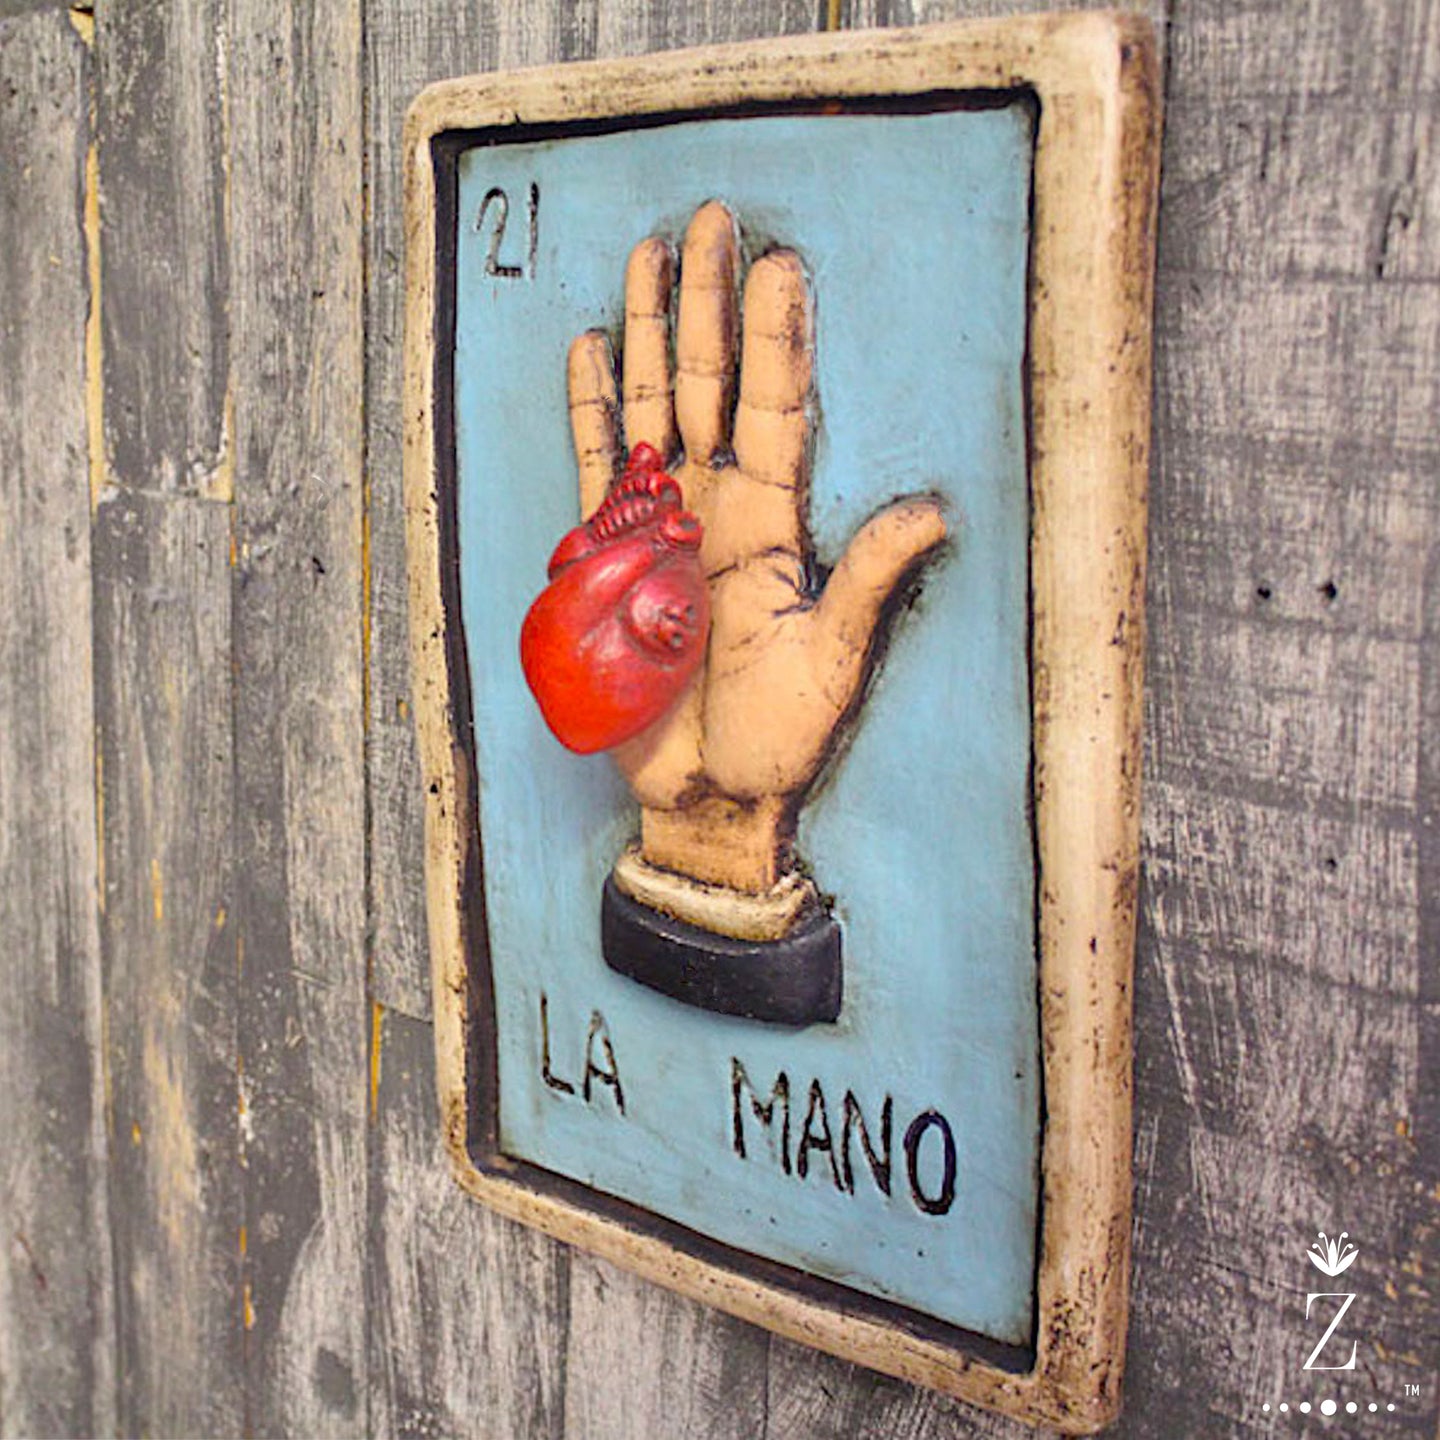  la Loteria La Mano wall art